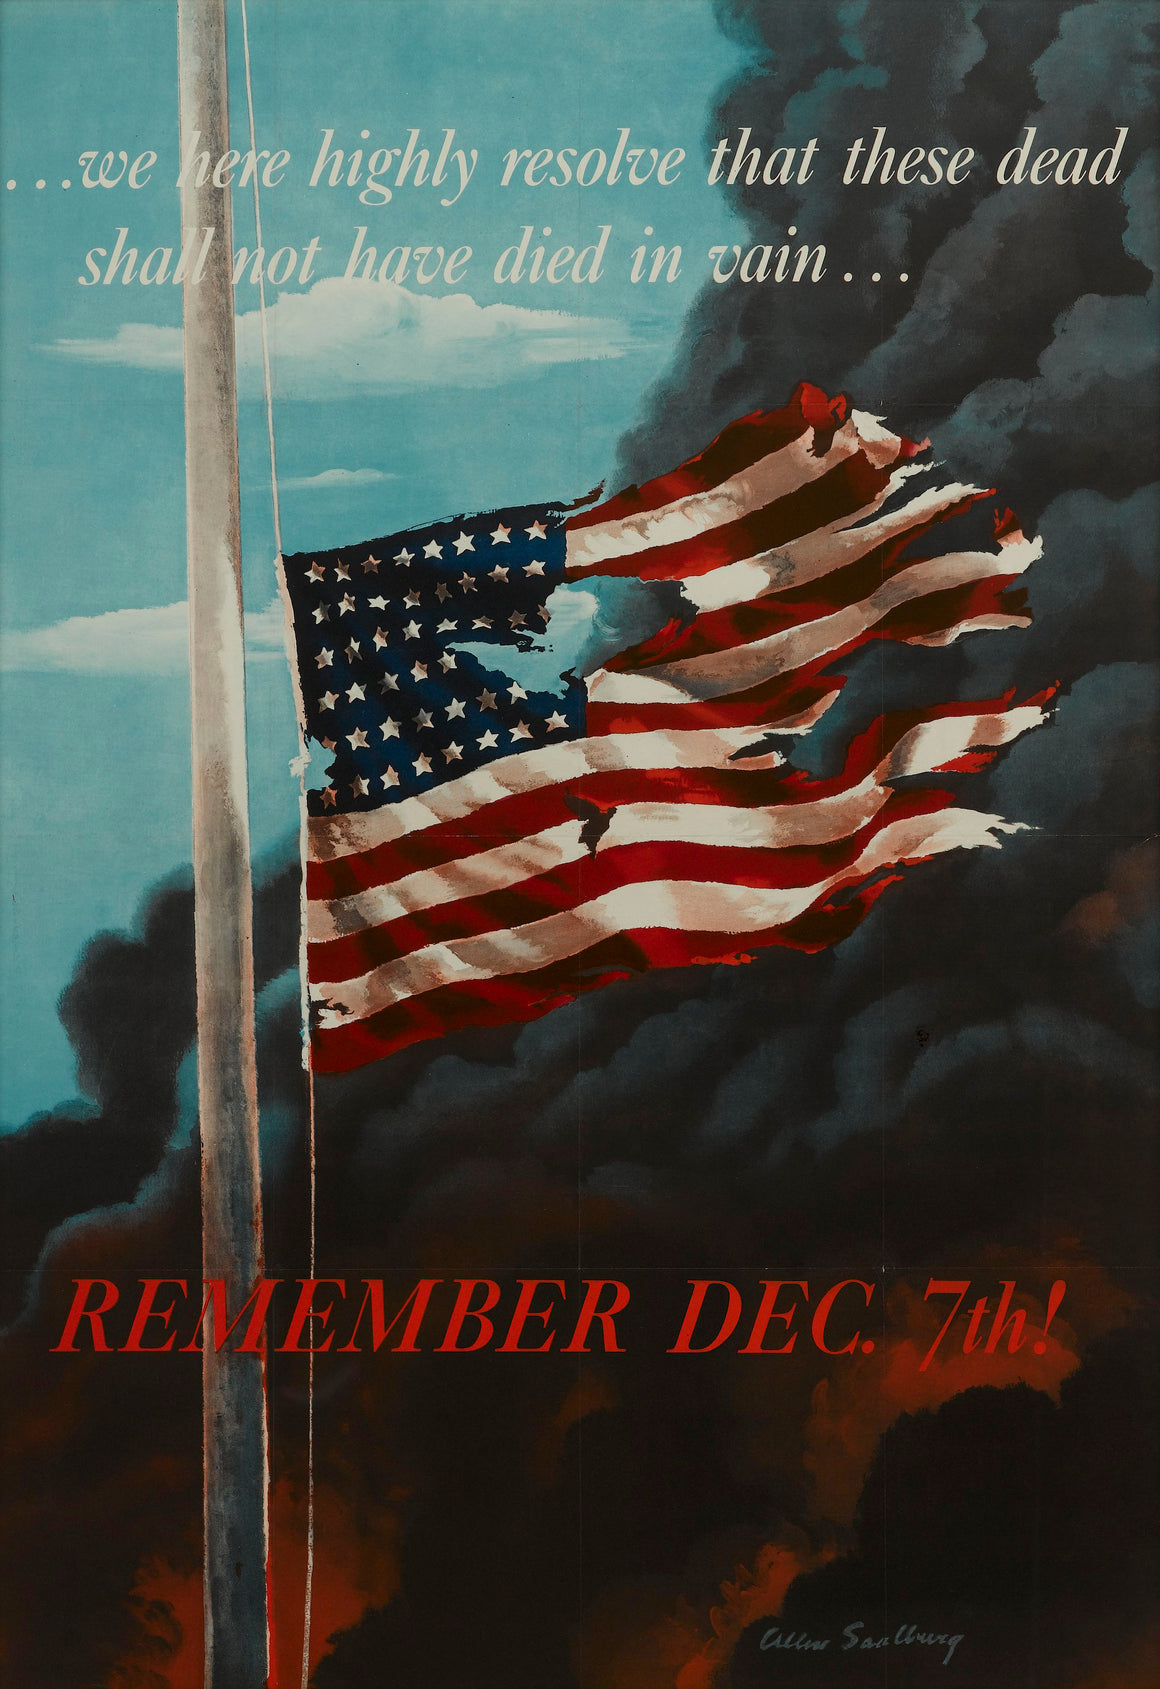 "Remember December 7th!" Vintage WWII Poster by Allen Saalburg, 1942